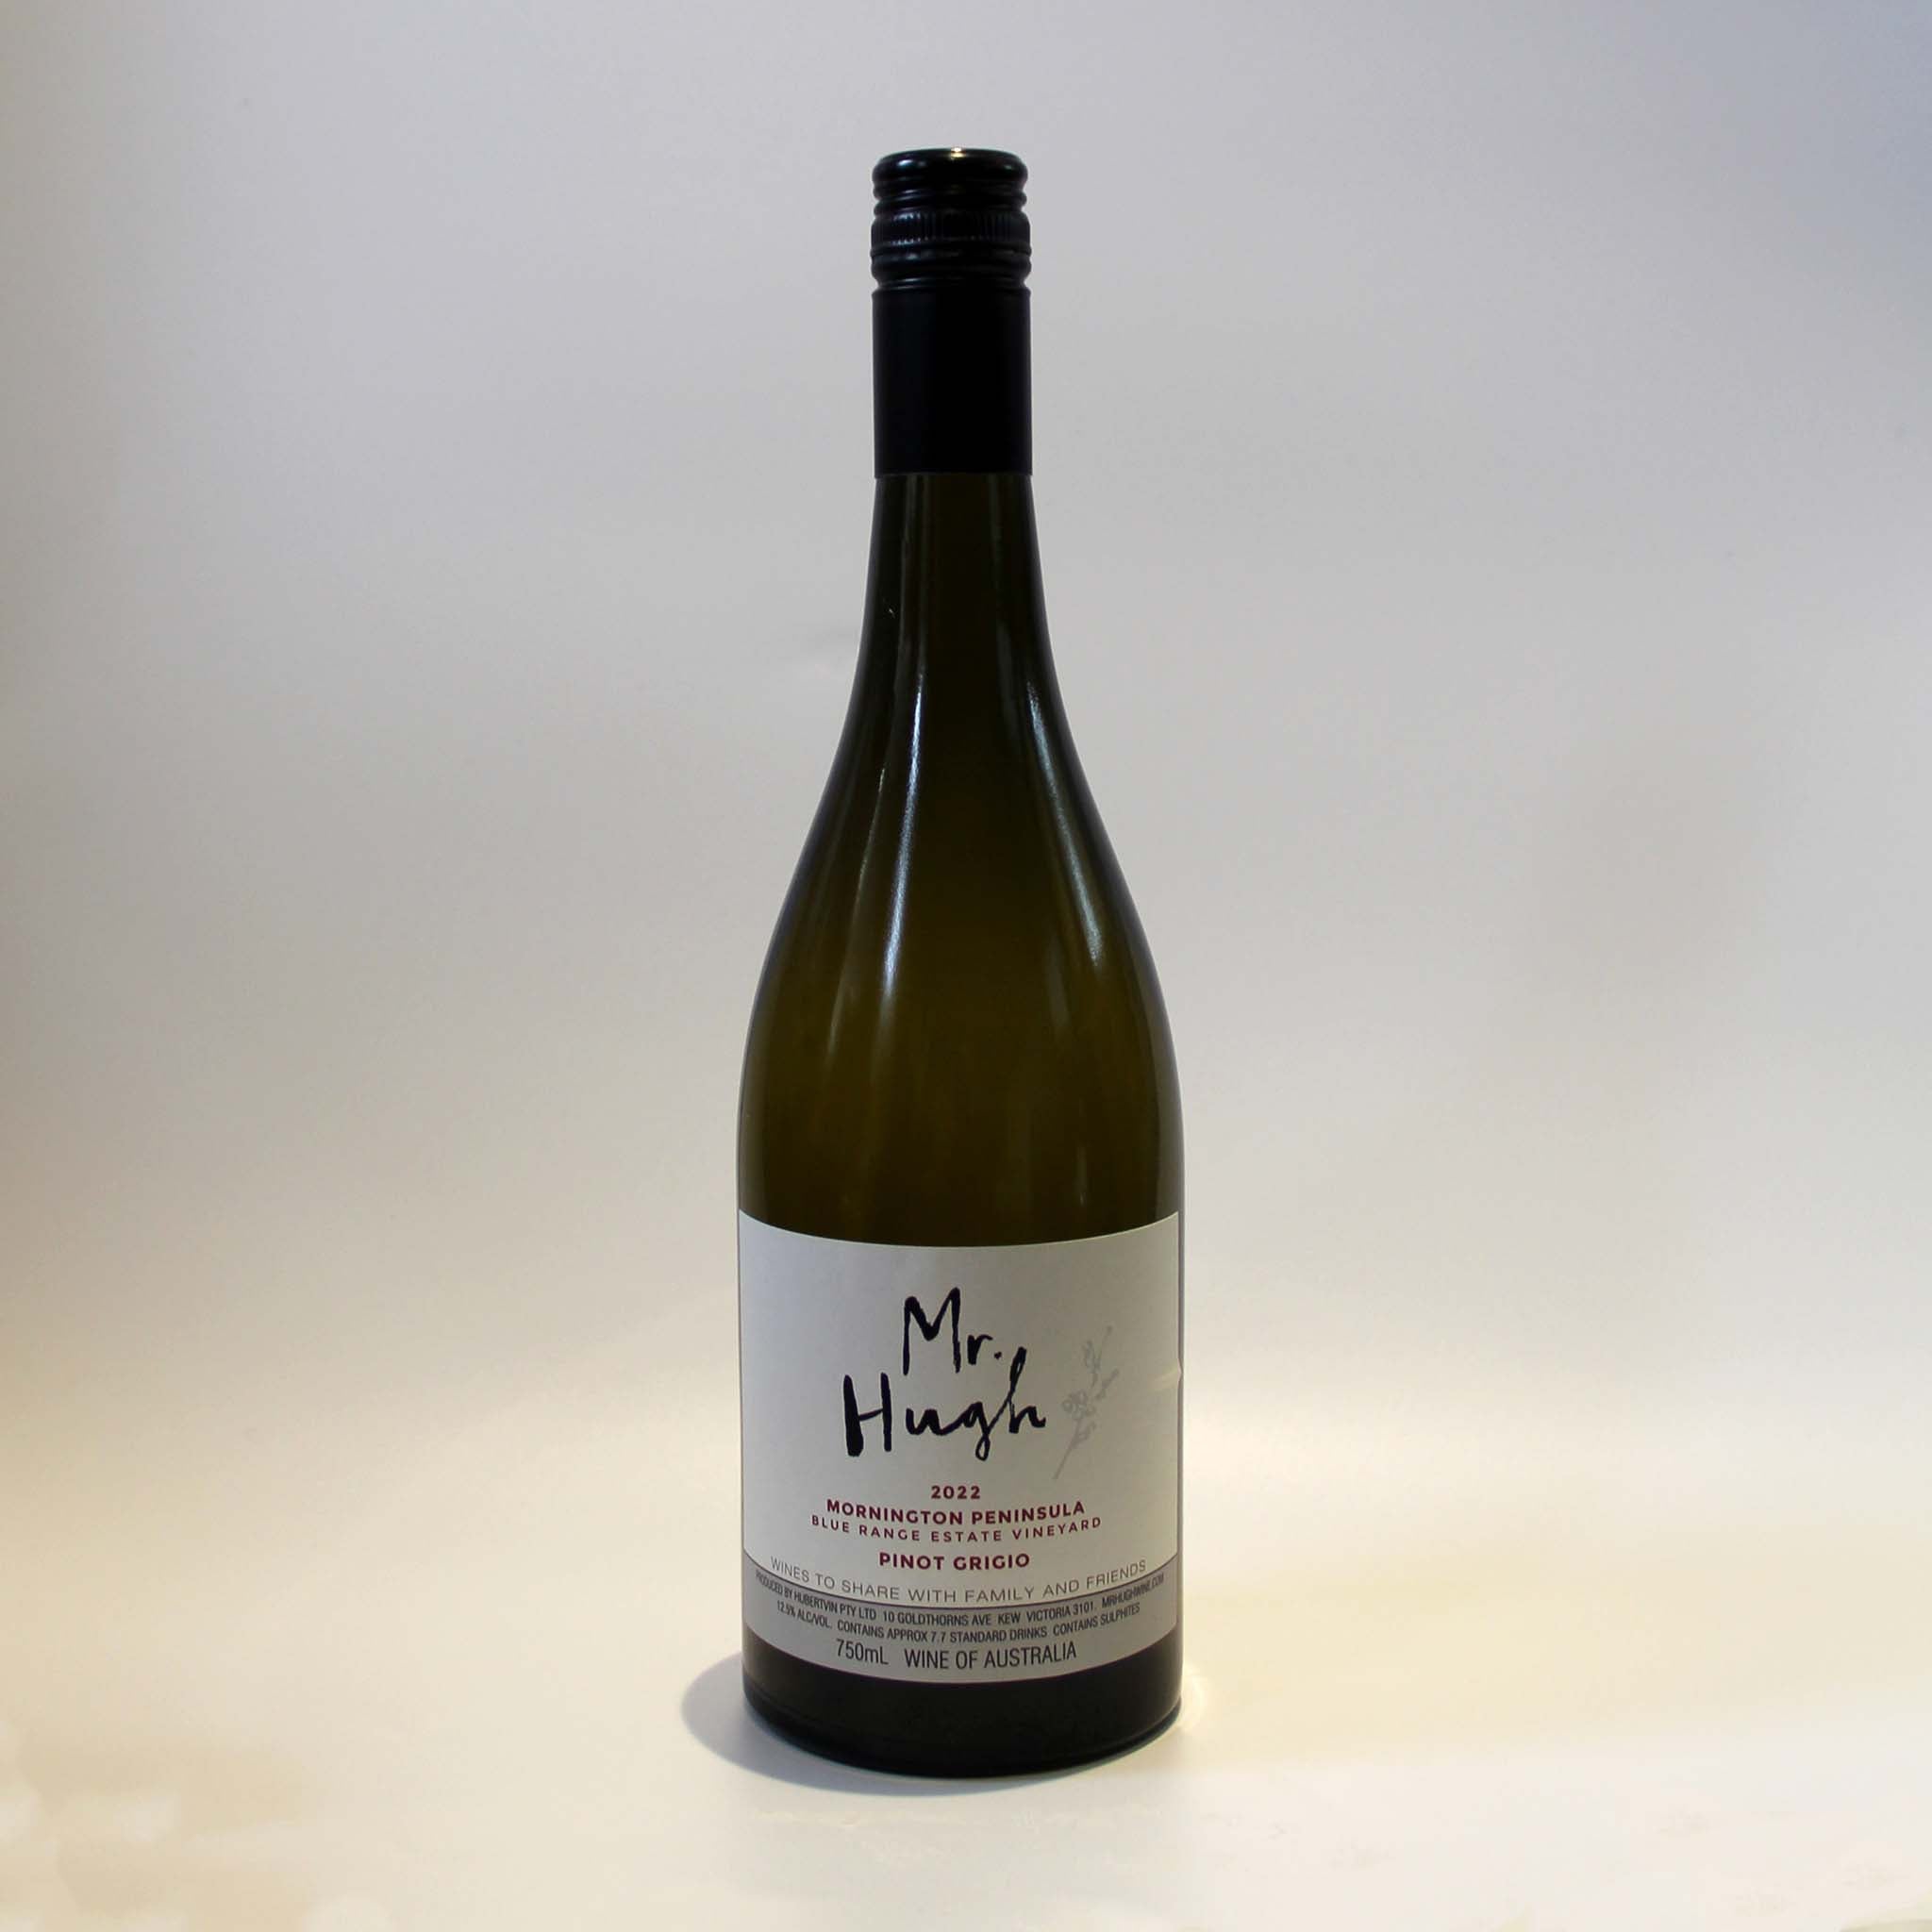 Mr Hugh - Mornington Peninsula Pinot Grigio 2022 (6 bottles)